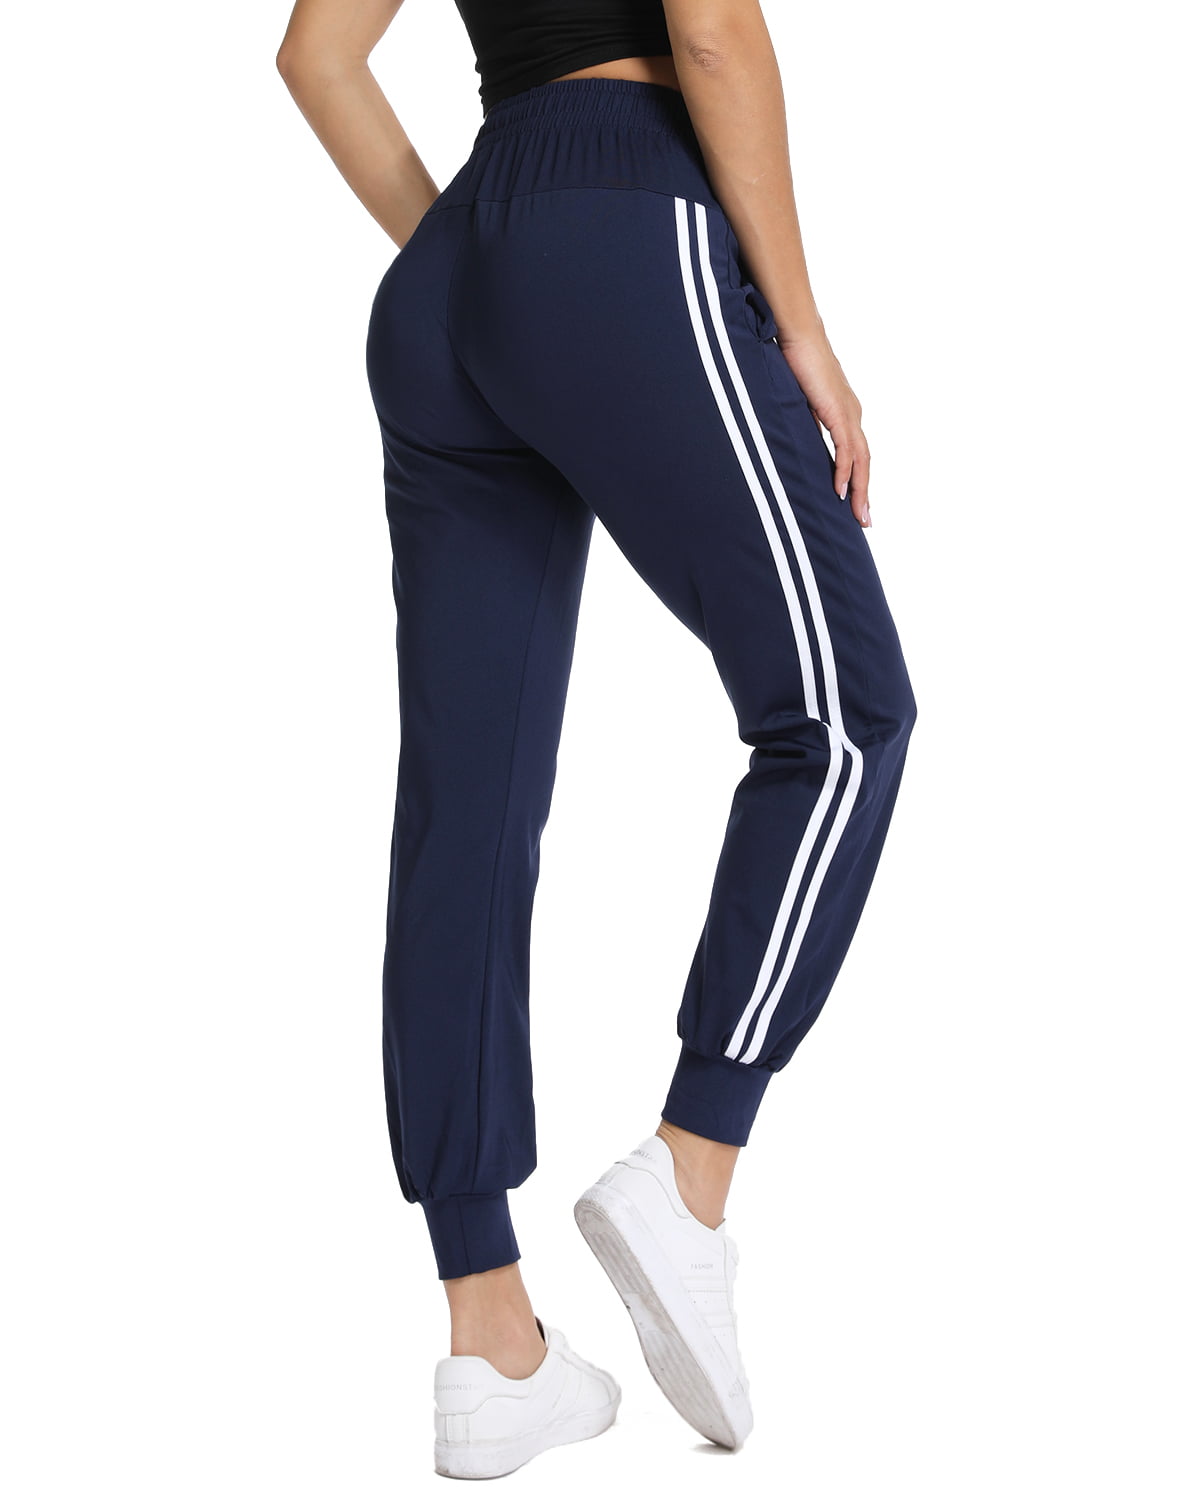 Workout Fitness Trousers Yoga Pants Womens Gym Leggings Jogger Running Pants UK 